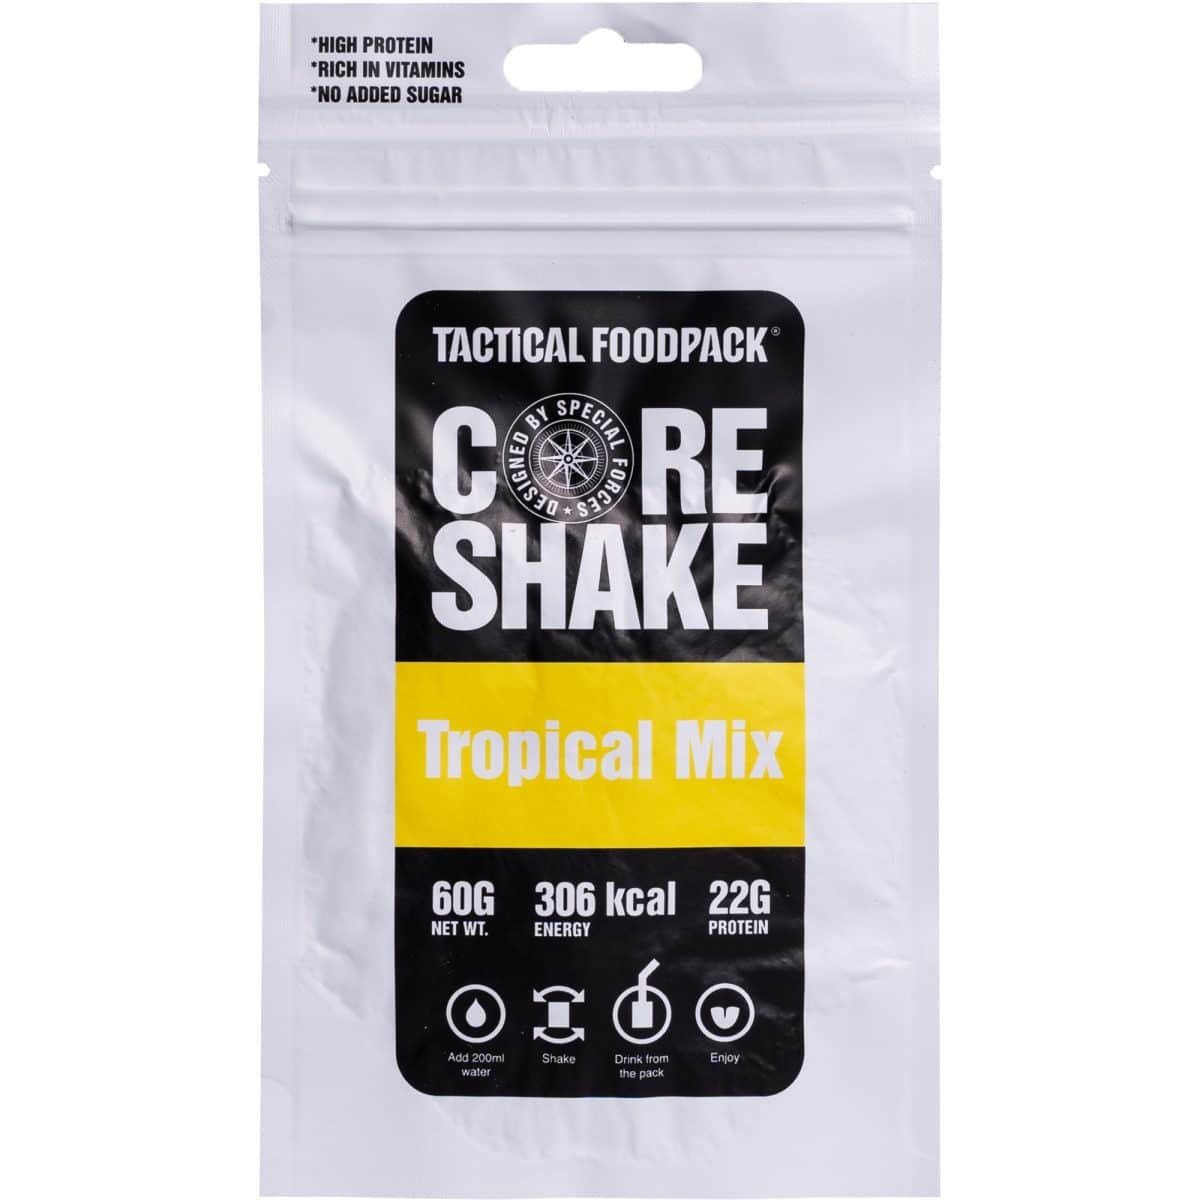 Shake mix tropical Tactical Foodpack